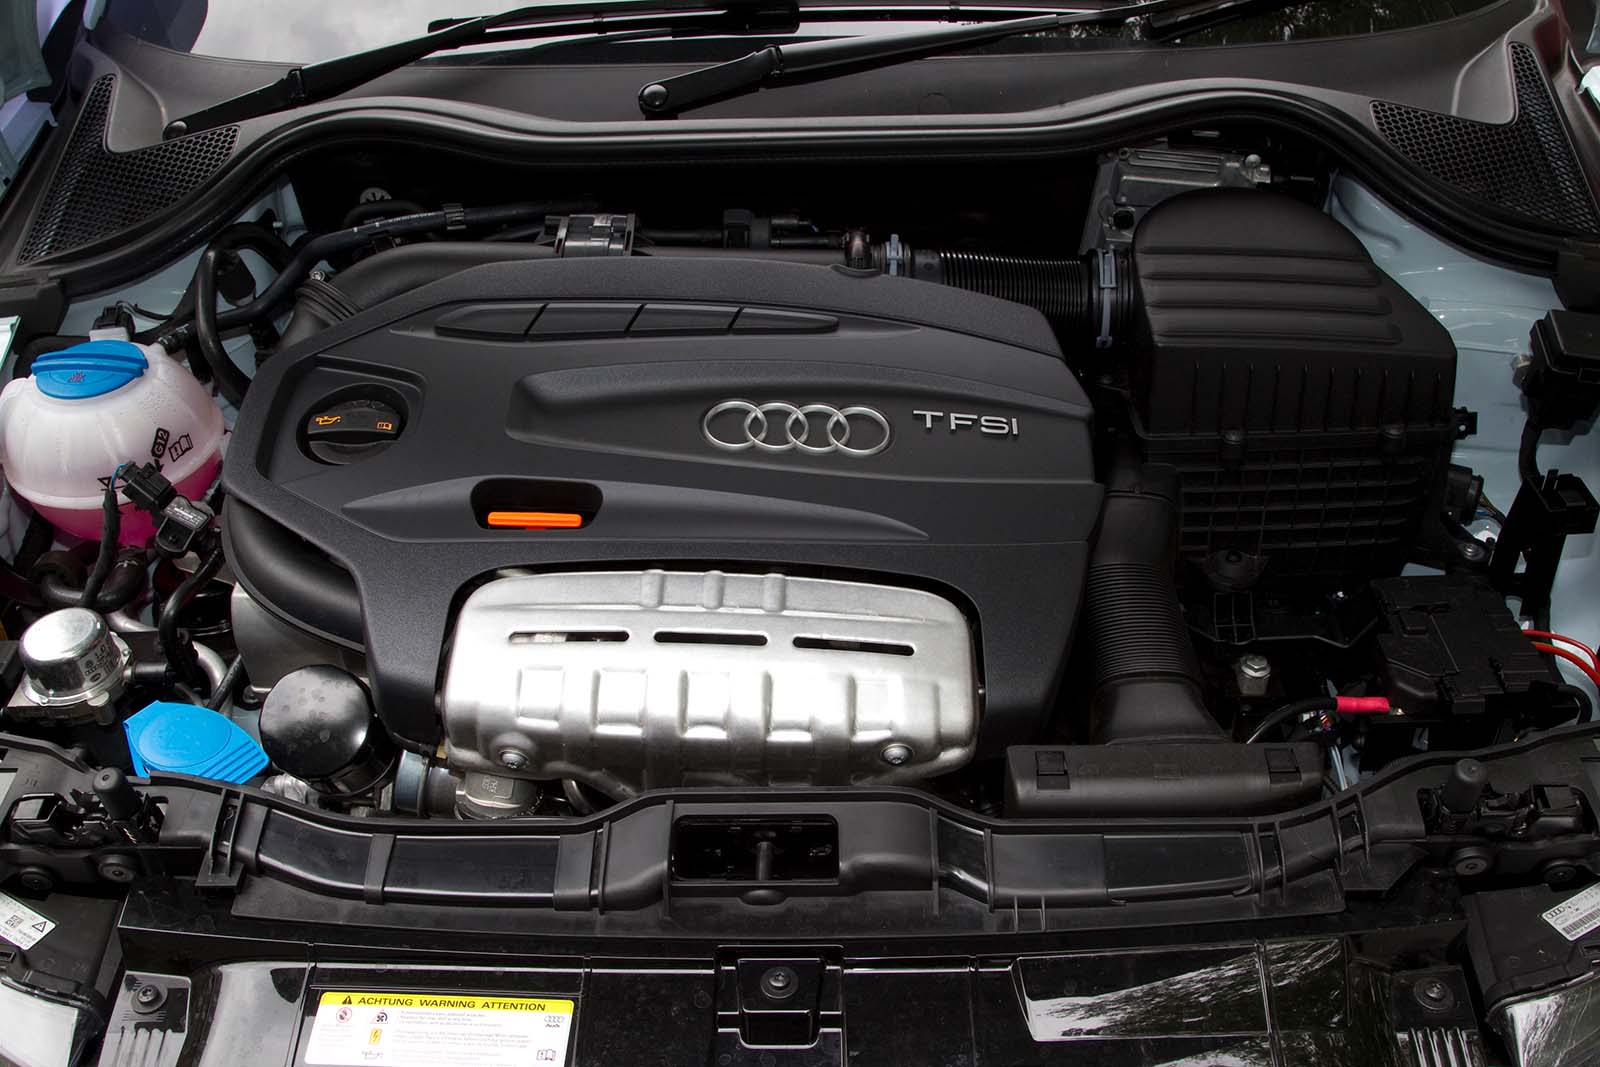 Audi A1 engine bay